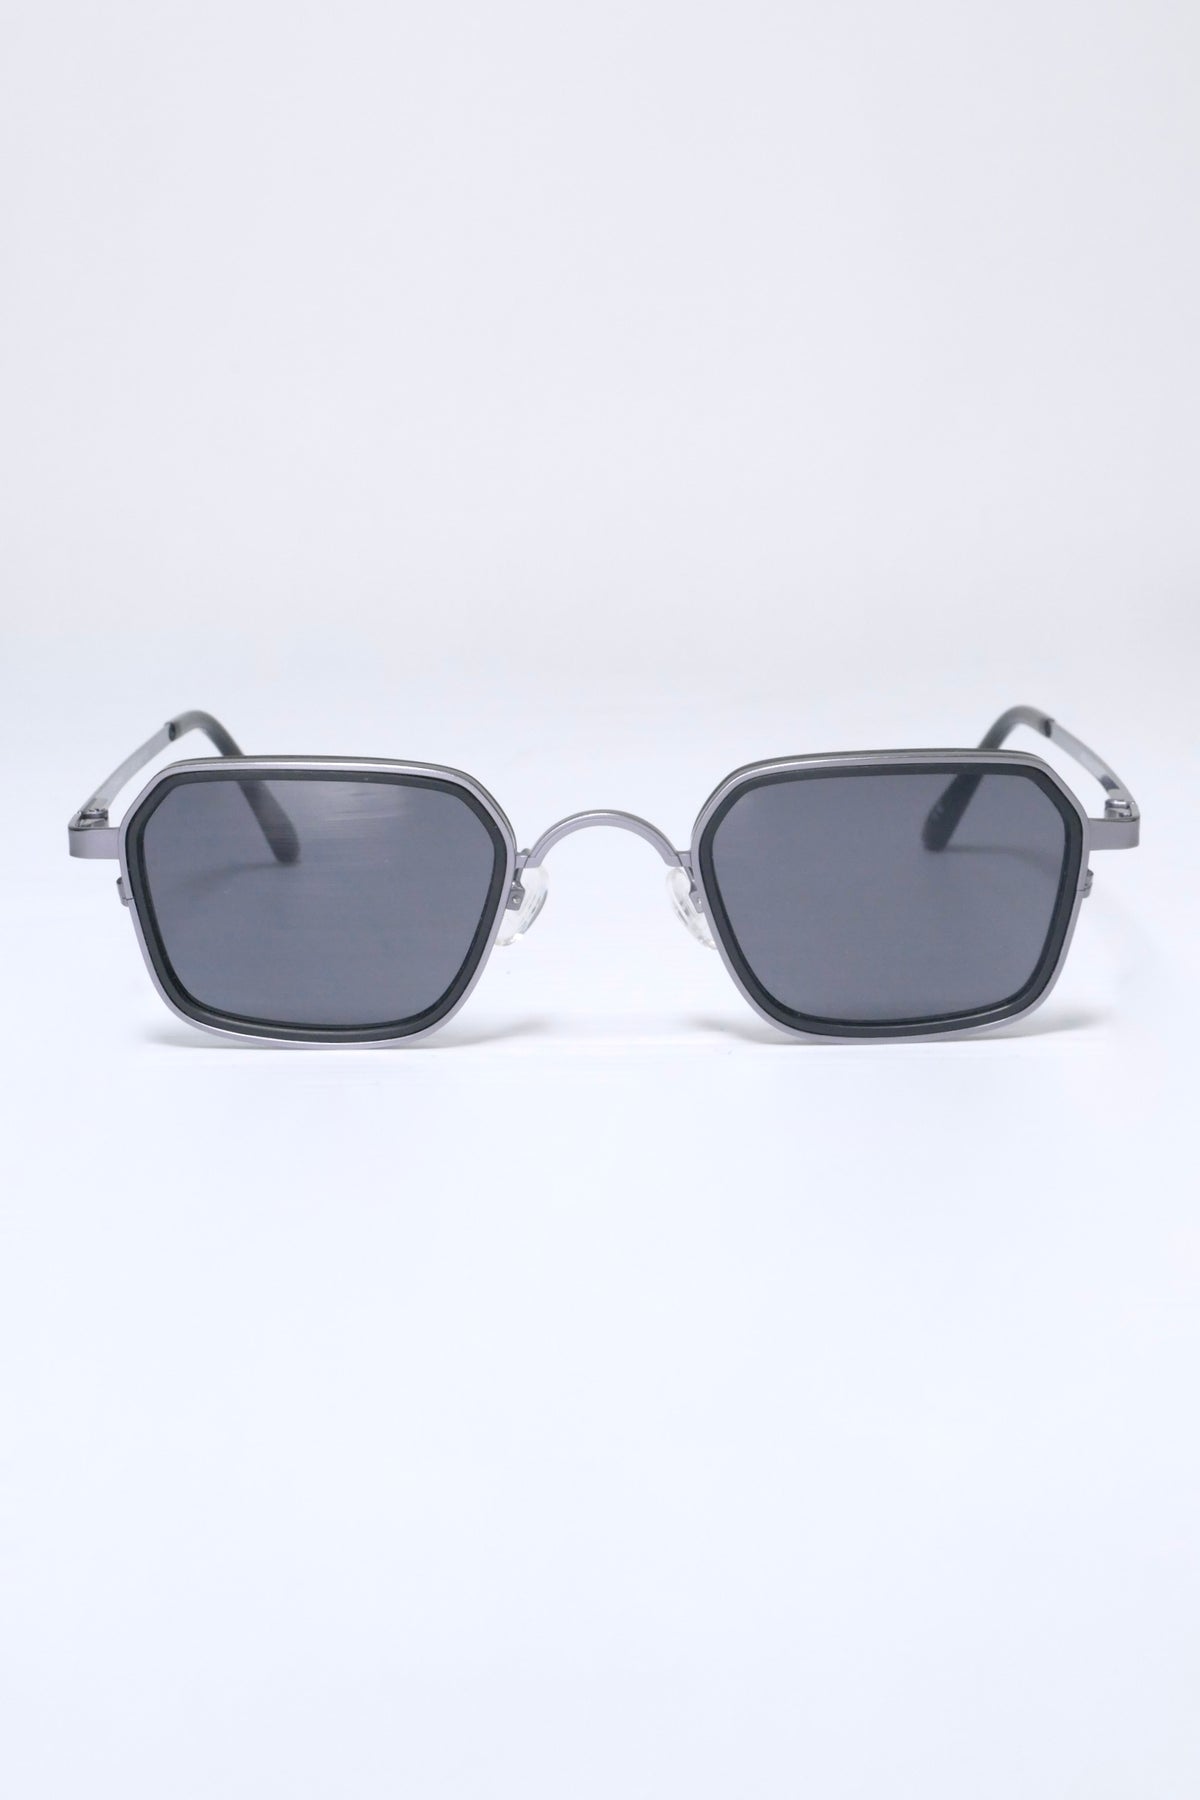 WEAREEYES Gamma X Sunglasses - Grey